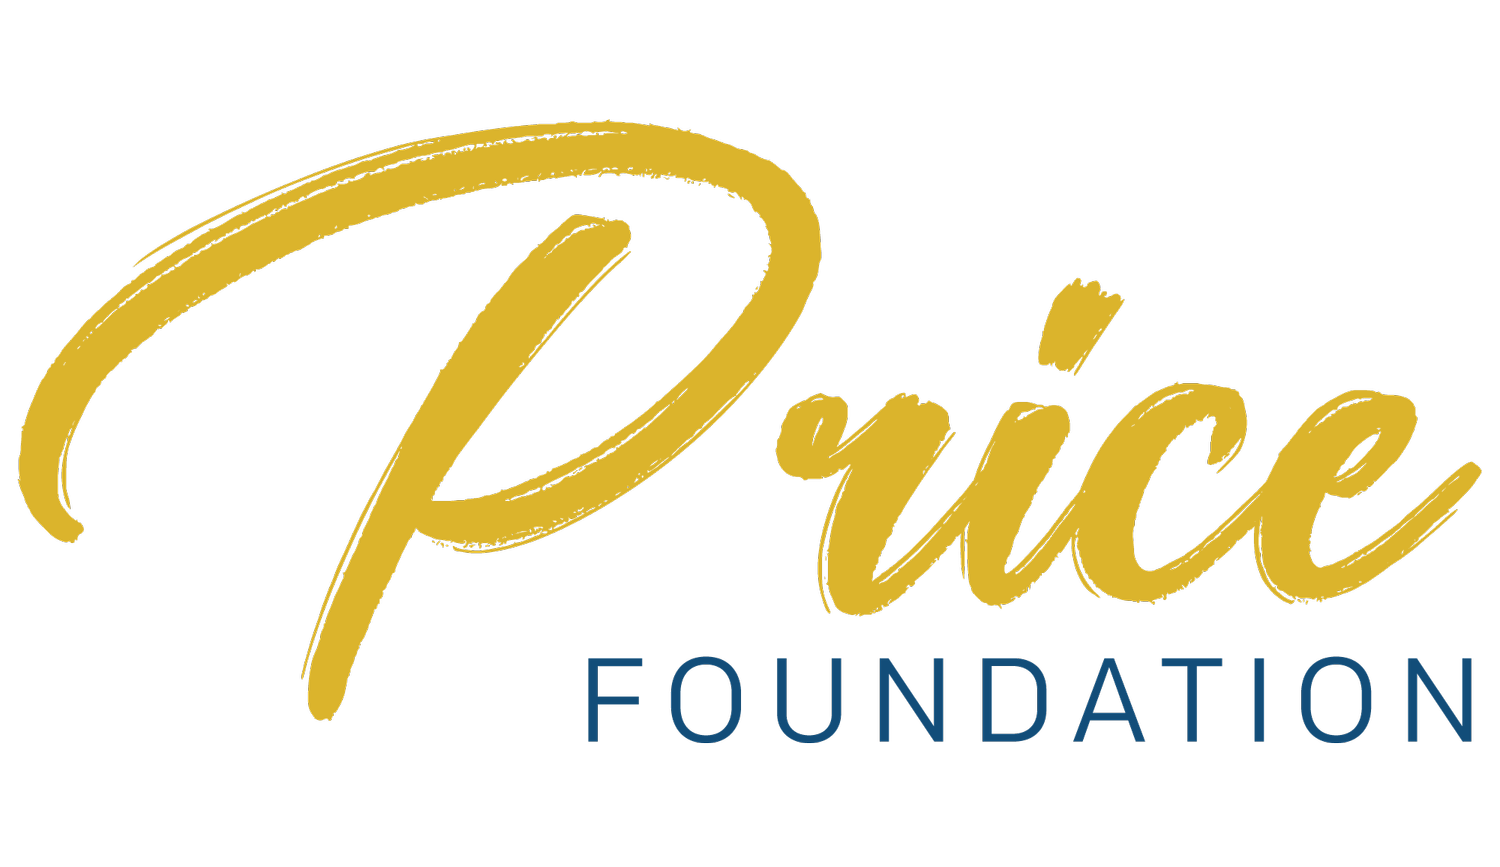 Price Foundation